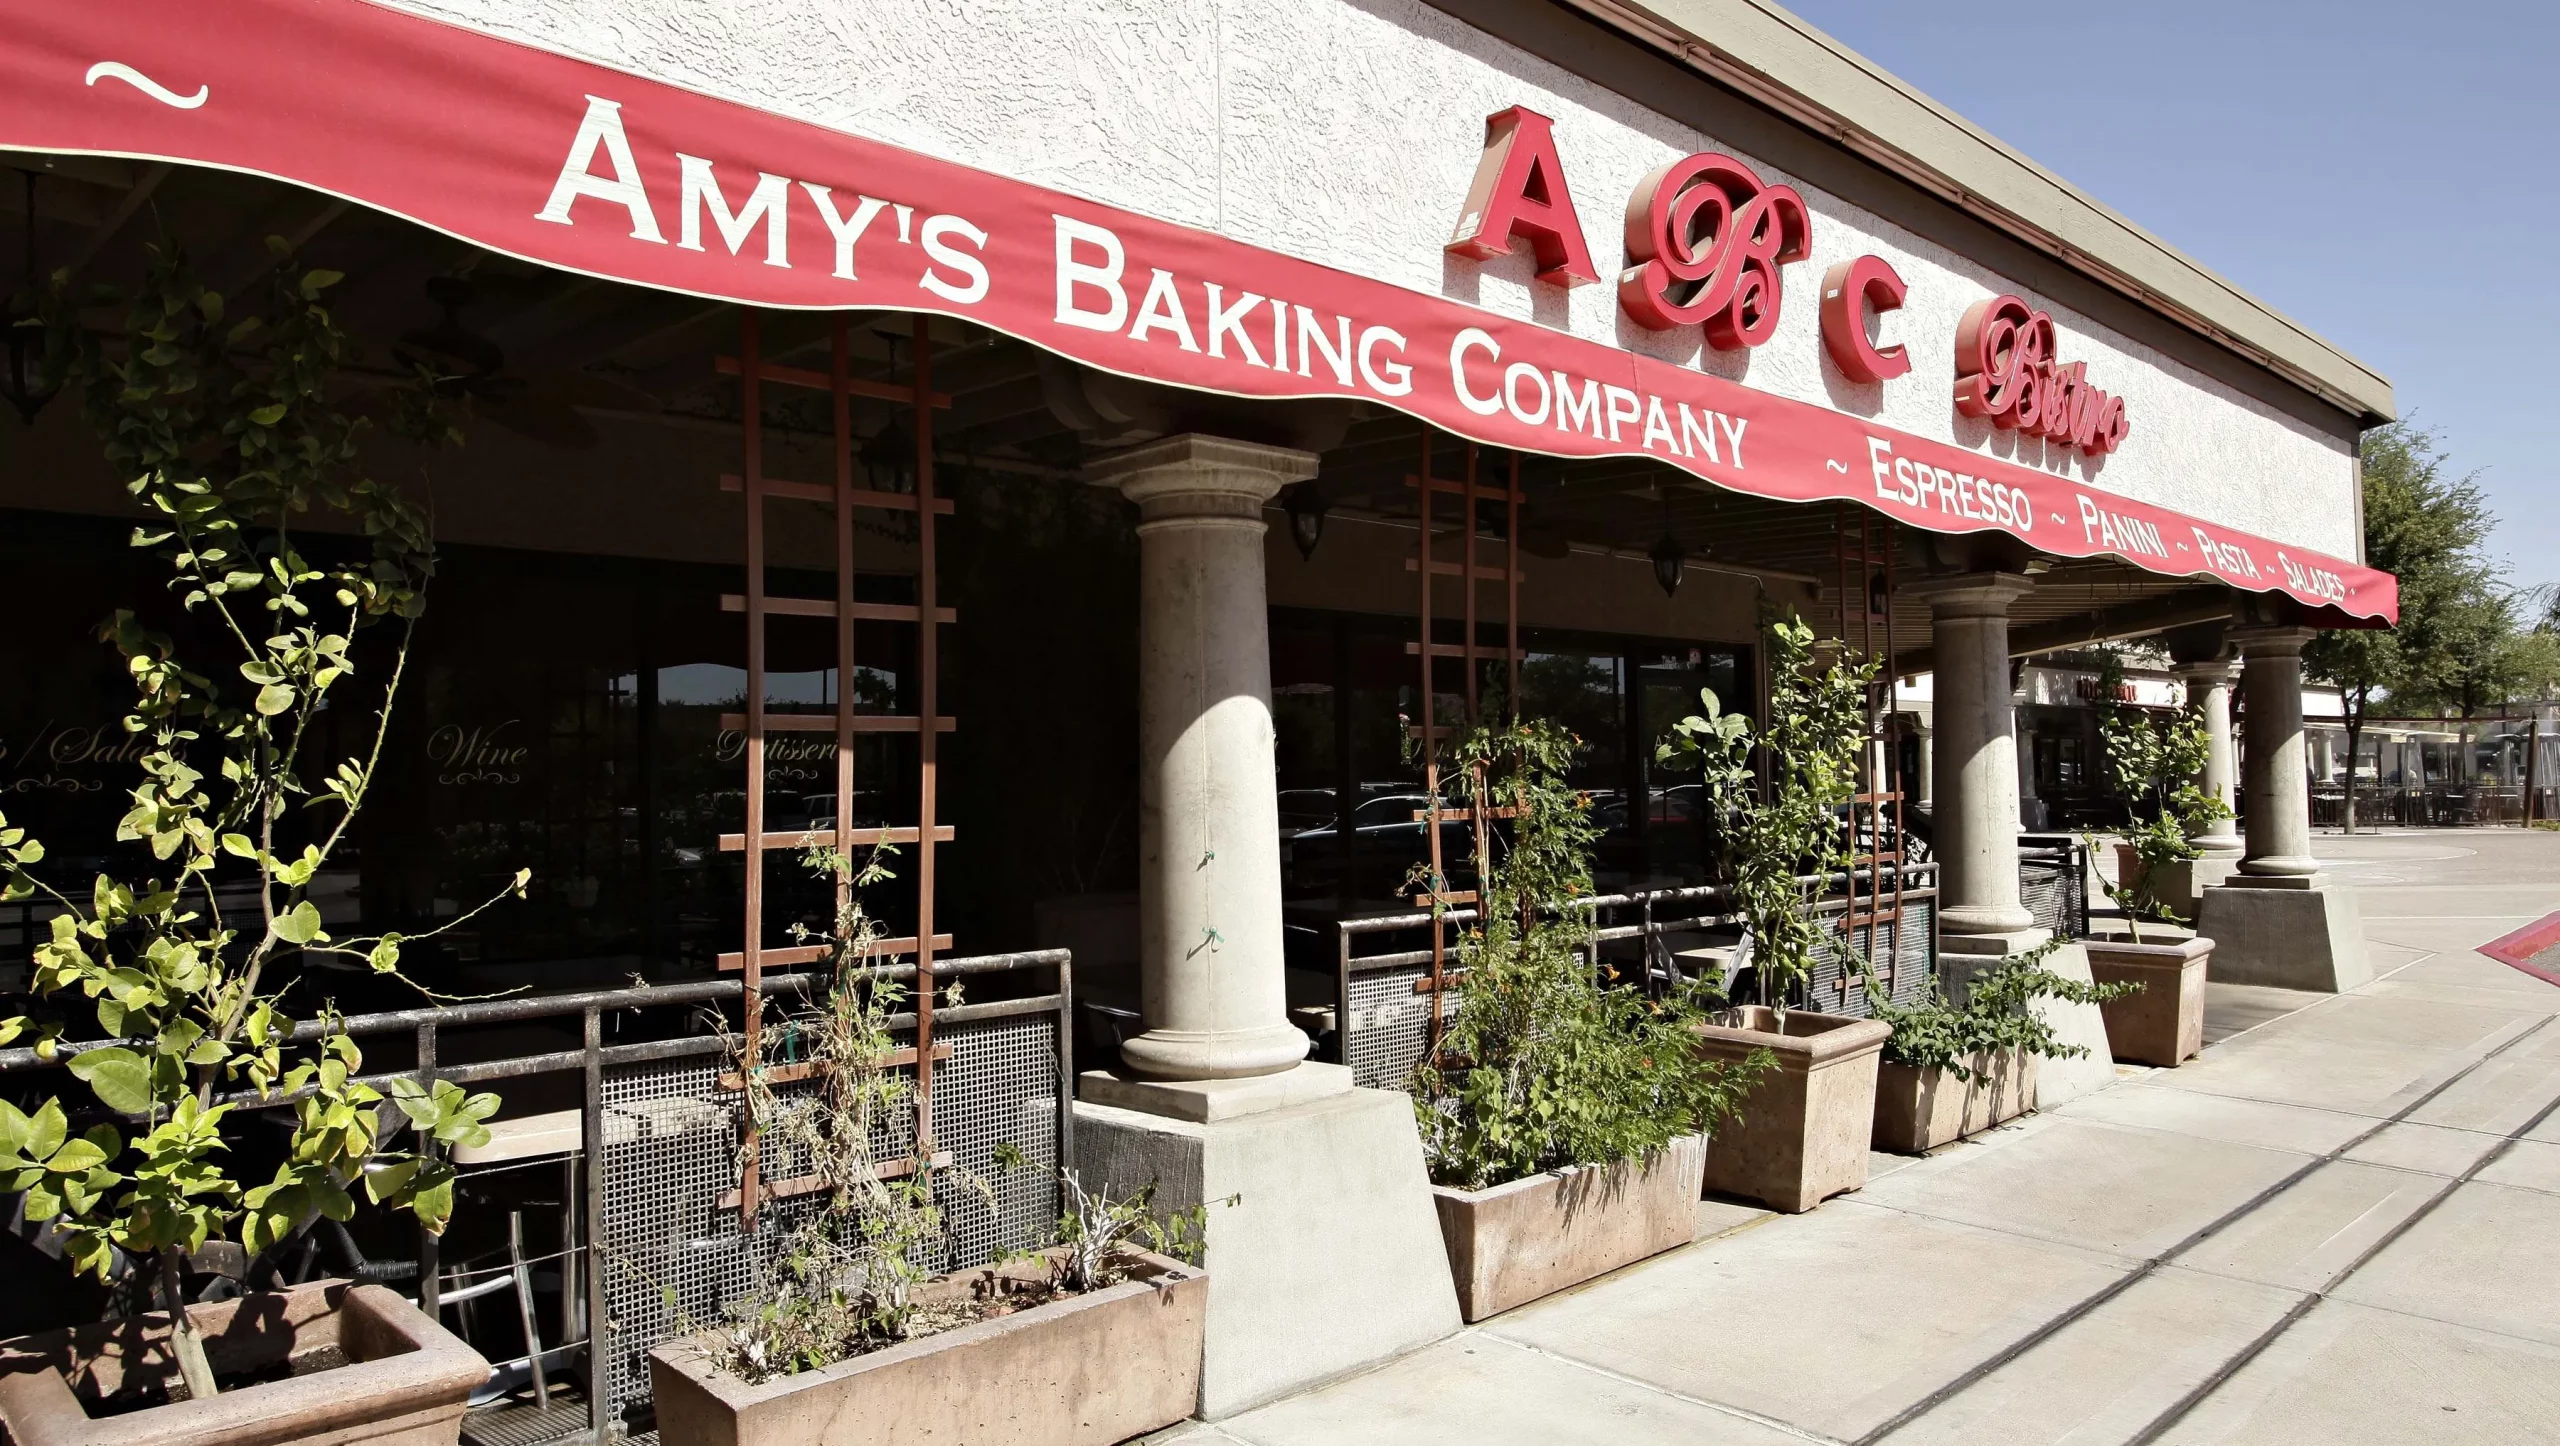 Amy's Baking Company in Scottsdale, Arizona: